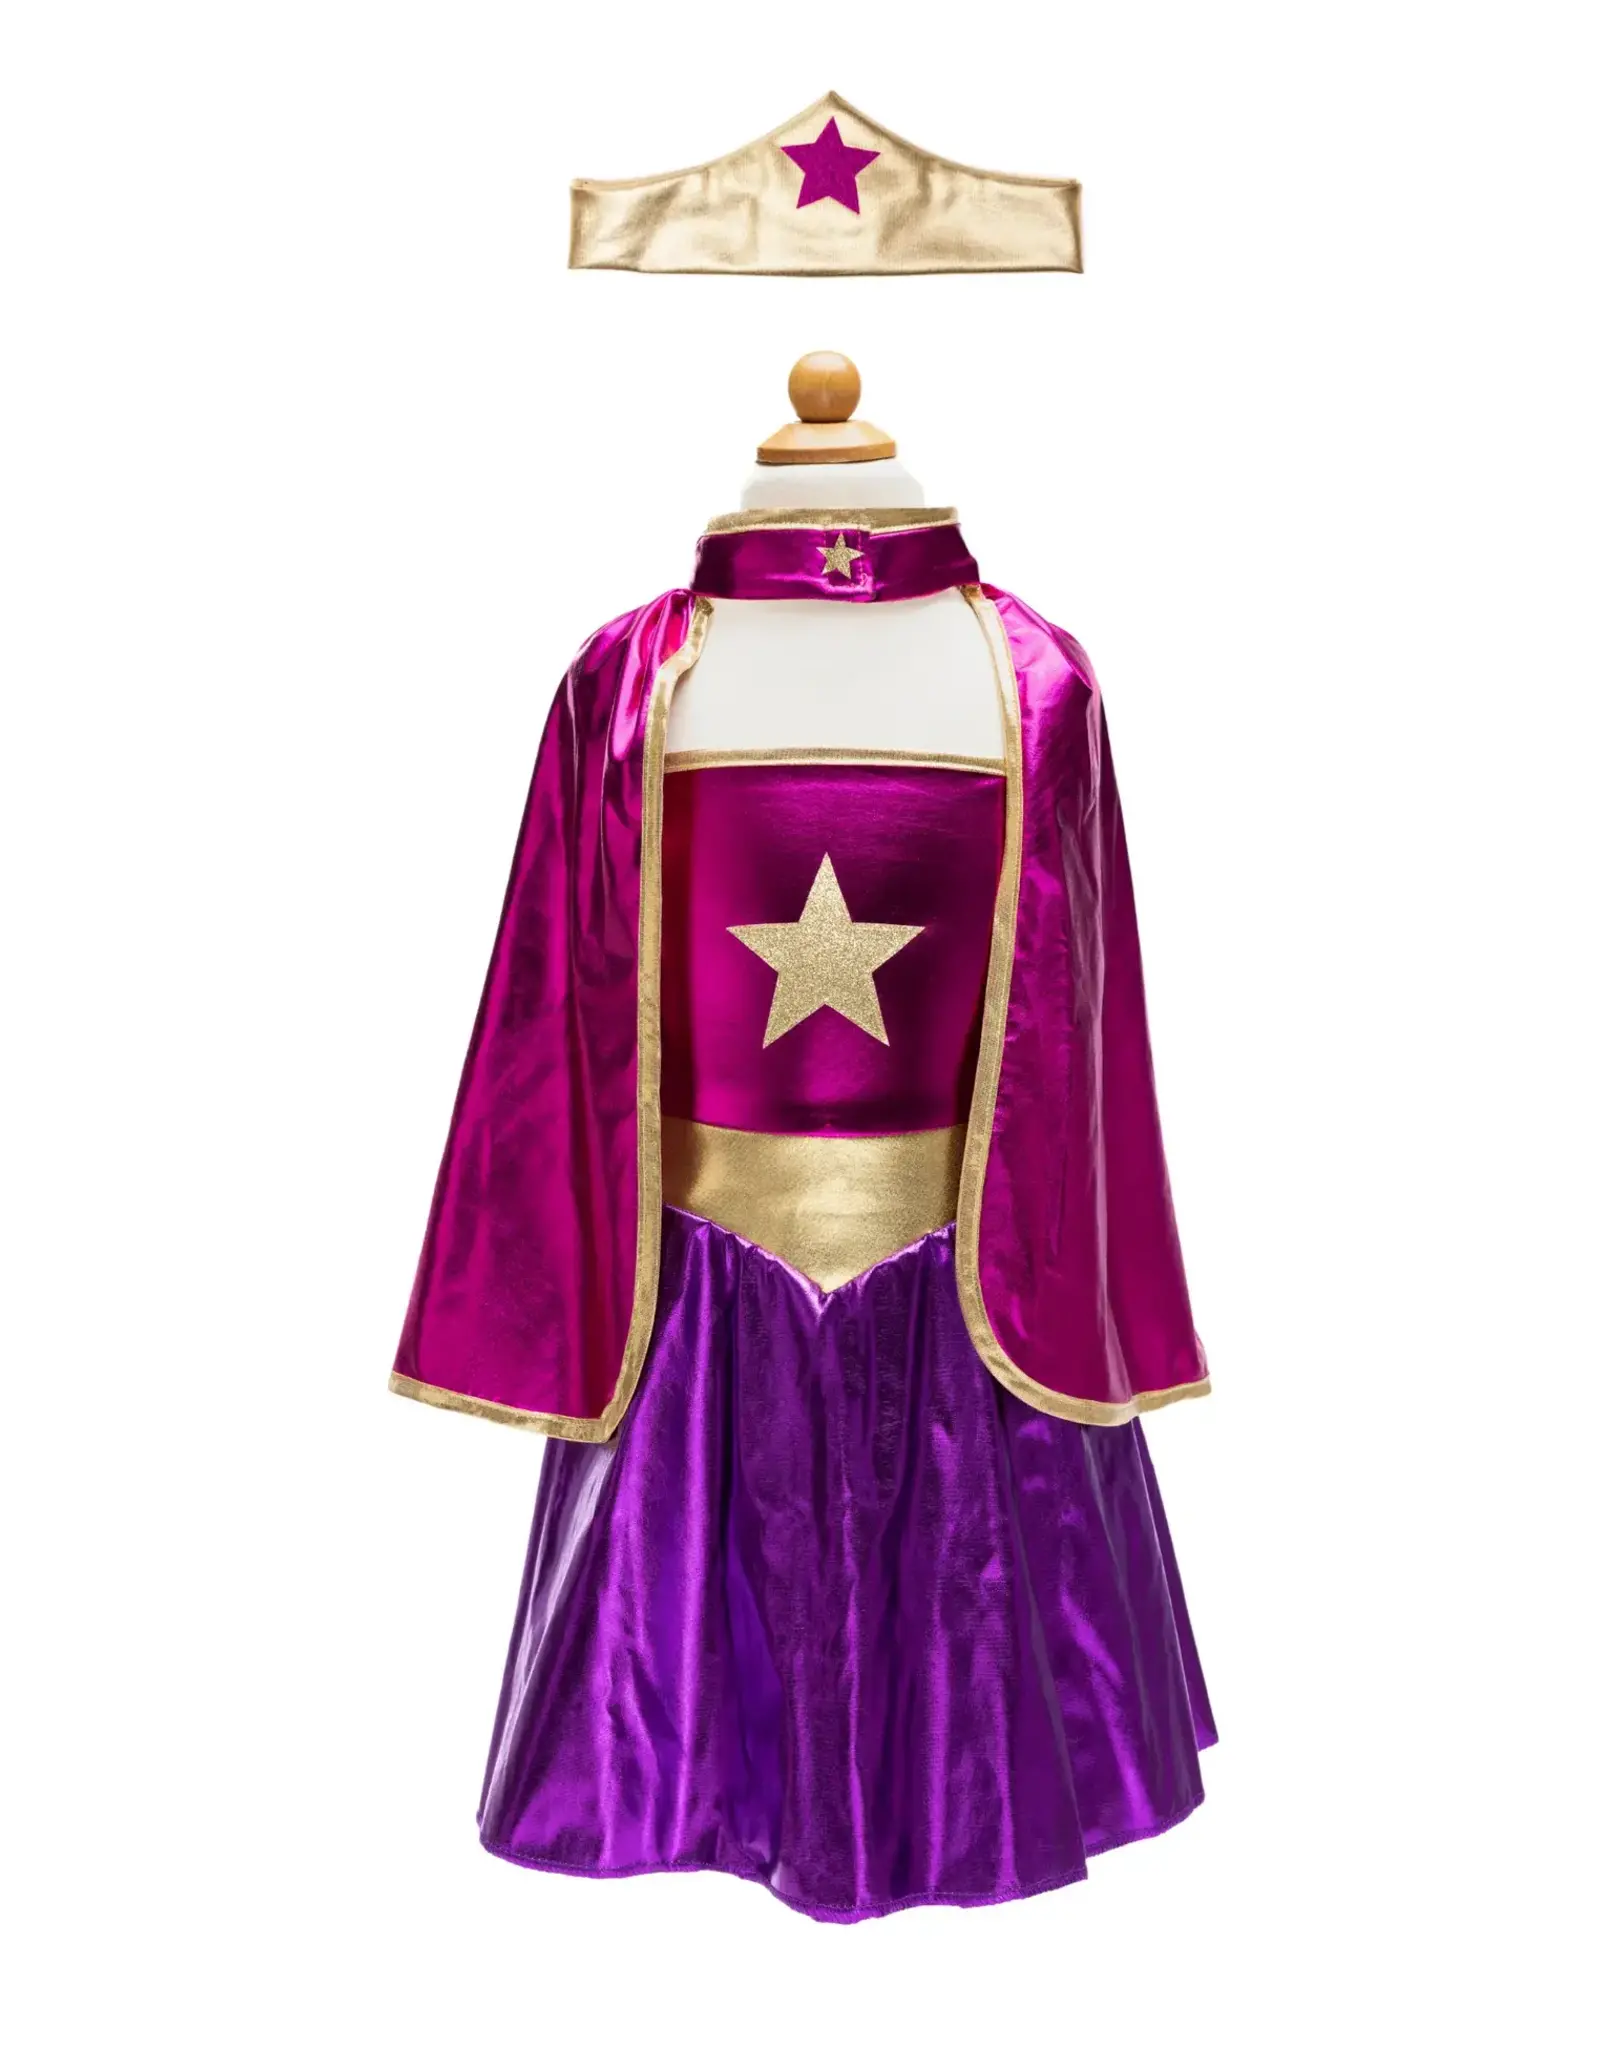 Great Pretenders Superhero Star Dress, Cape & Headpiece, Size 5/6